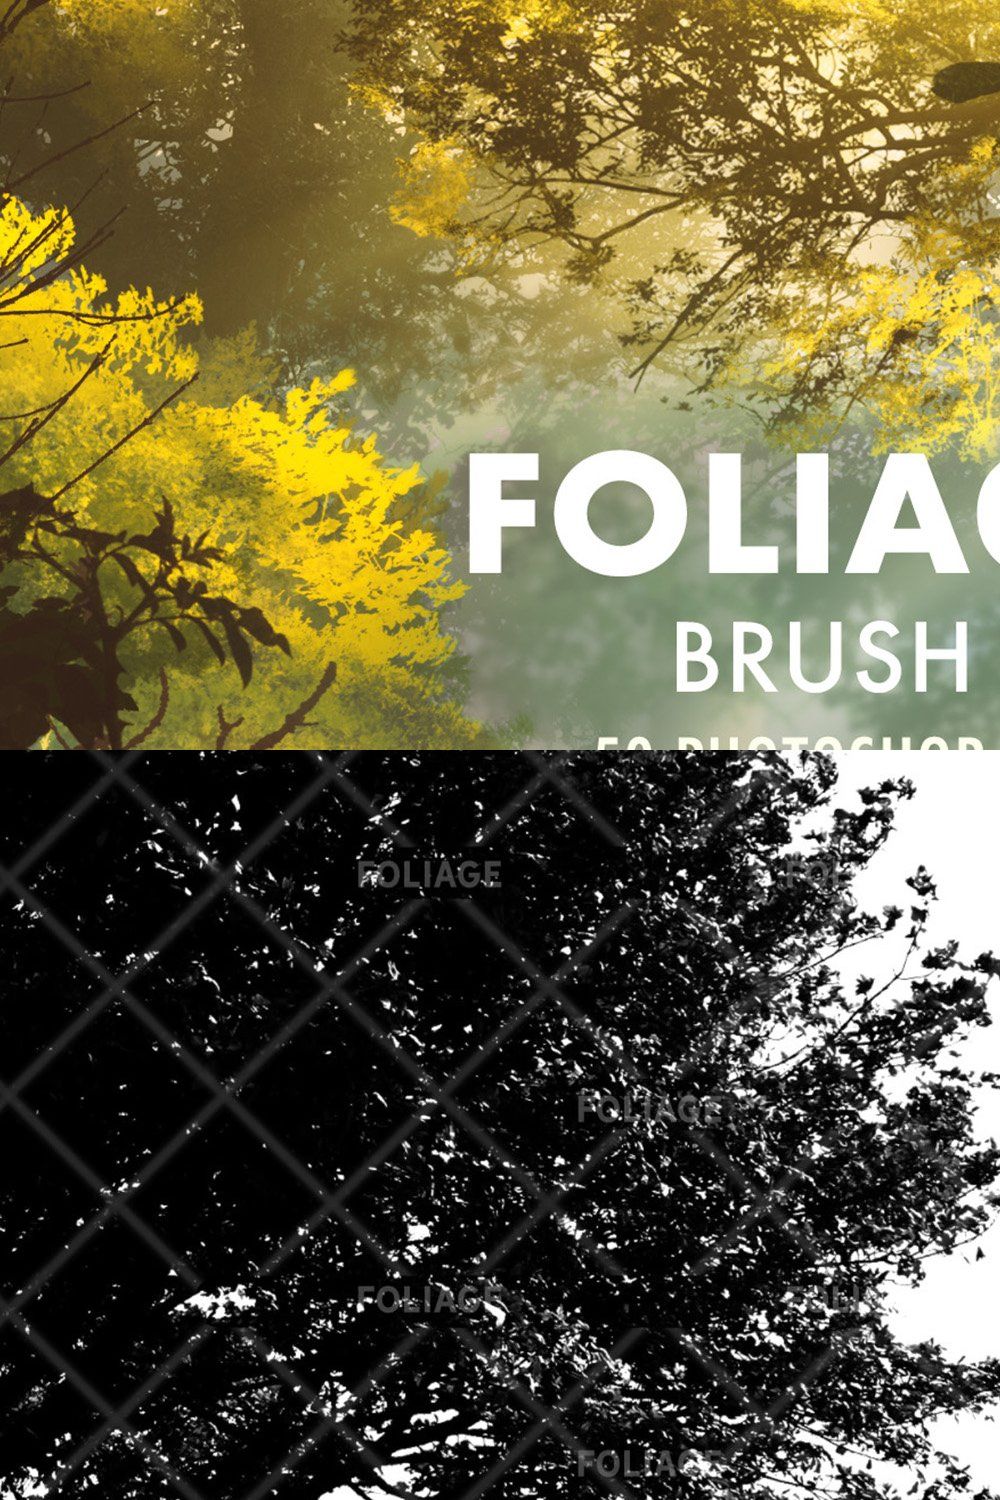 Foliage 2 Brush Set pinterest preview image.